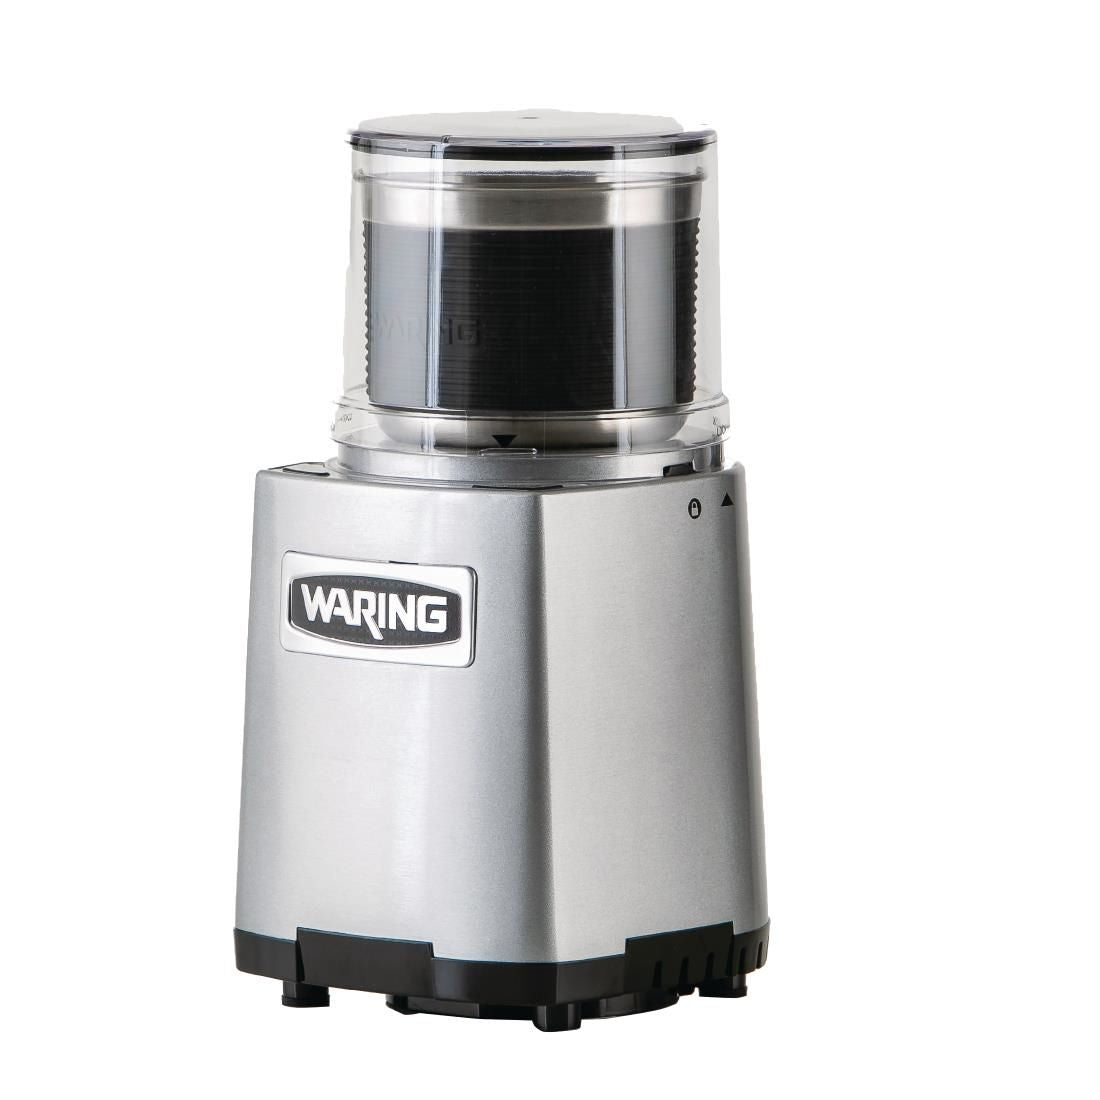 Waring Spice Grinder WSG60K - CK397 Home Appliances Waring   